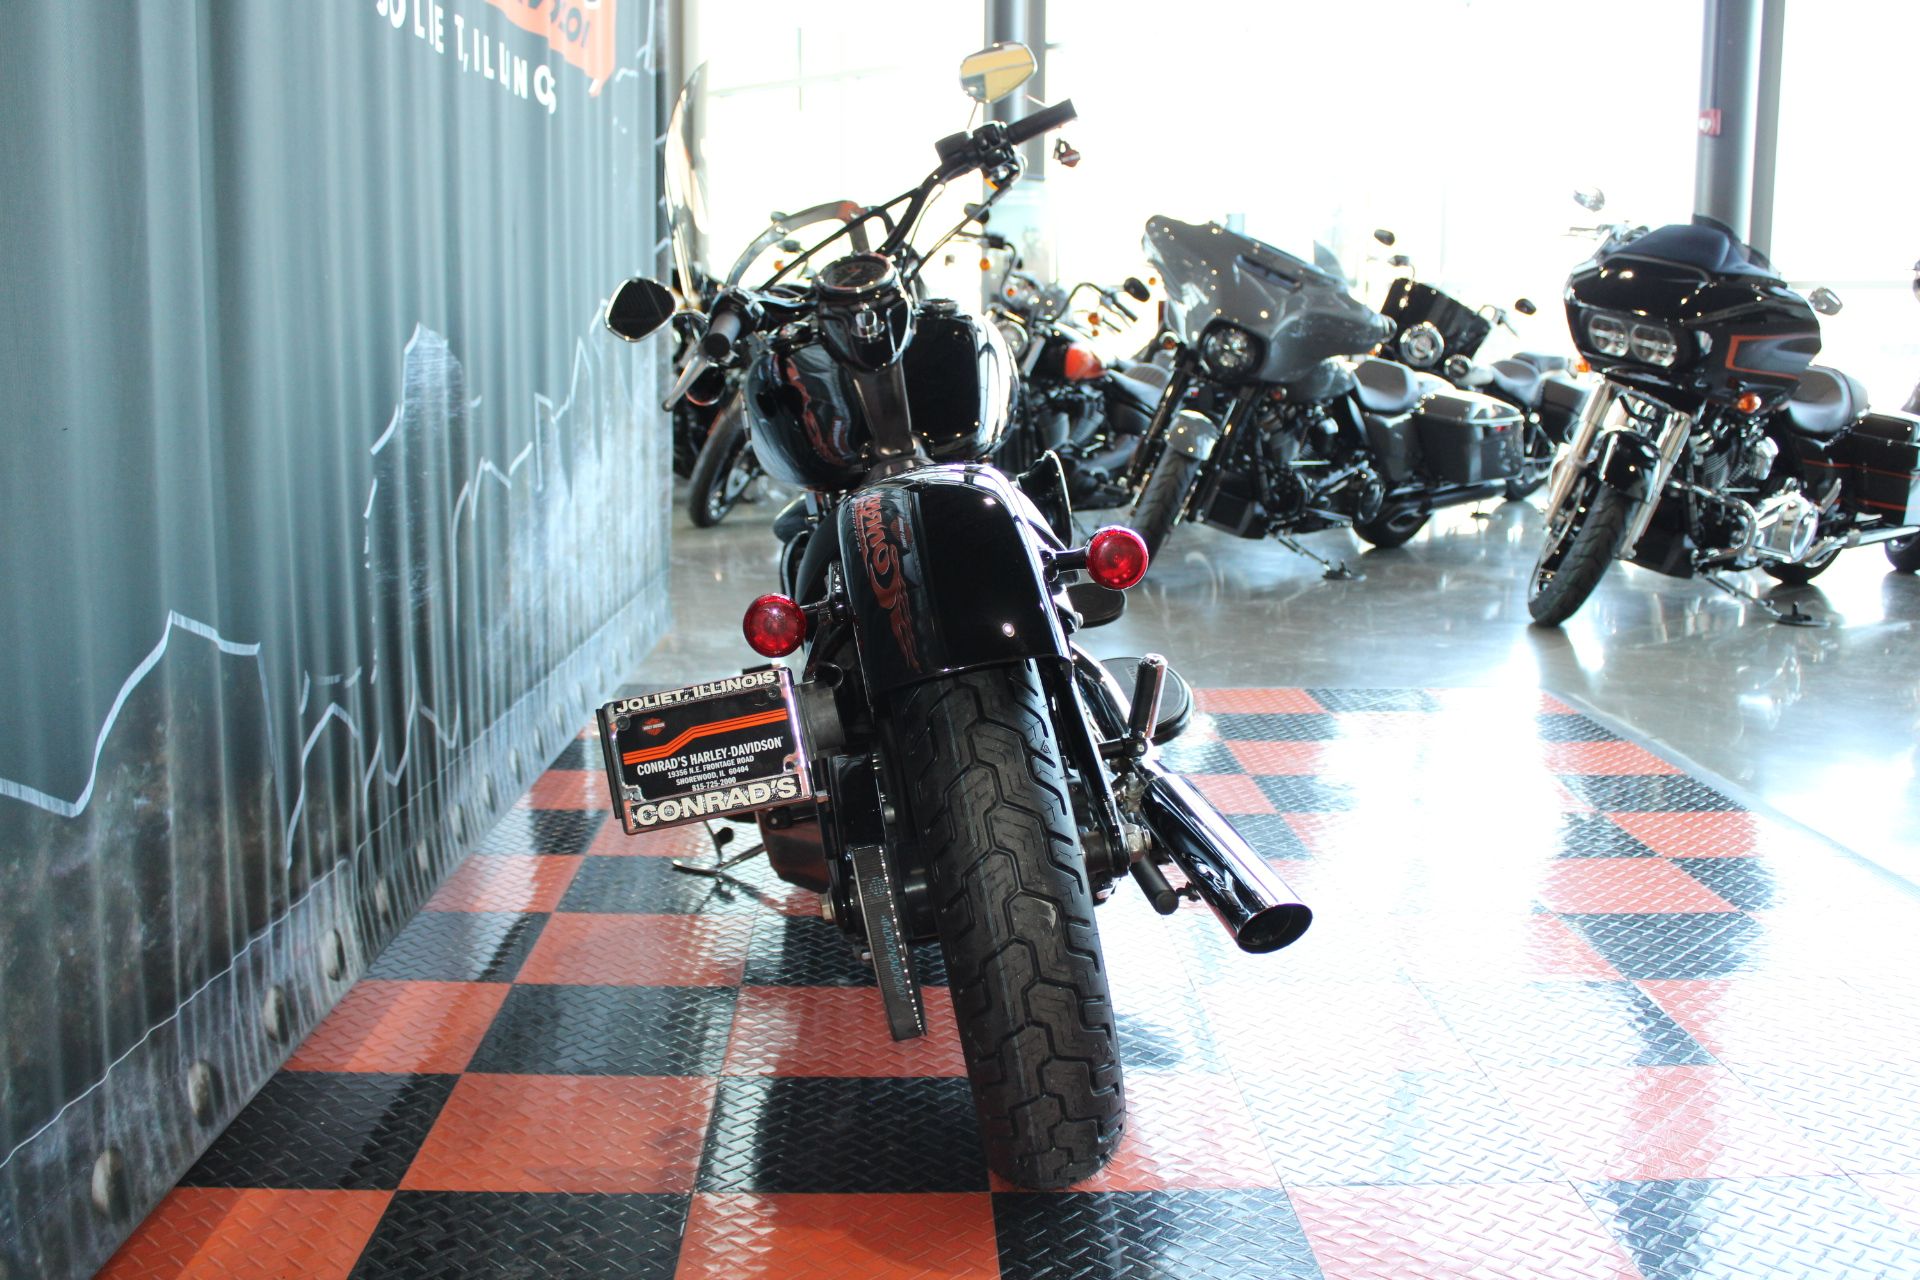 2013 Harley-Davidson Softail Slim® in Shorewood, Illinois - Photo 15